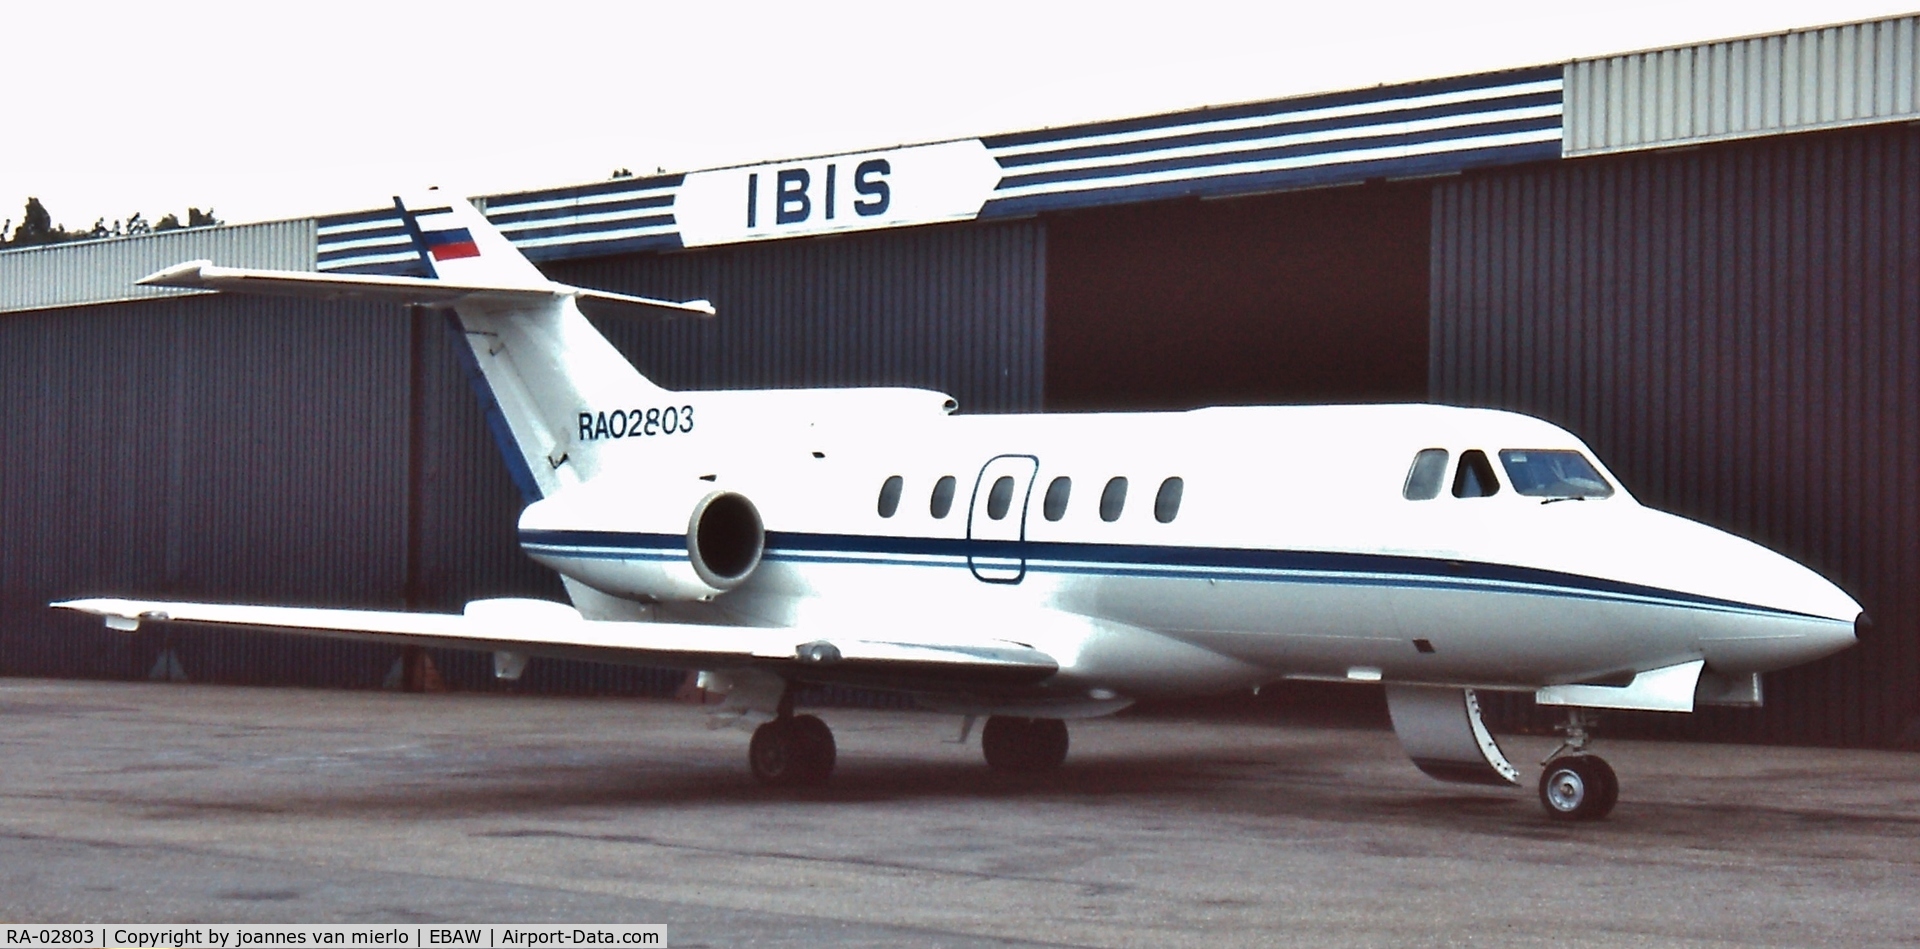 RA-02803, 1981 British Aerospace HS.125 Series 700B C/N 257139, EBAW '80s